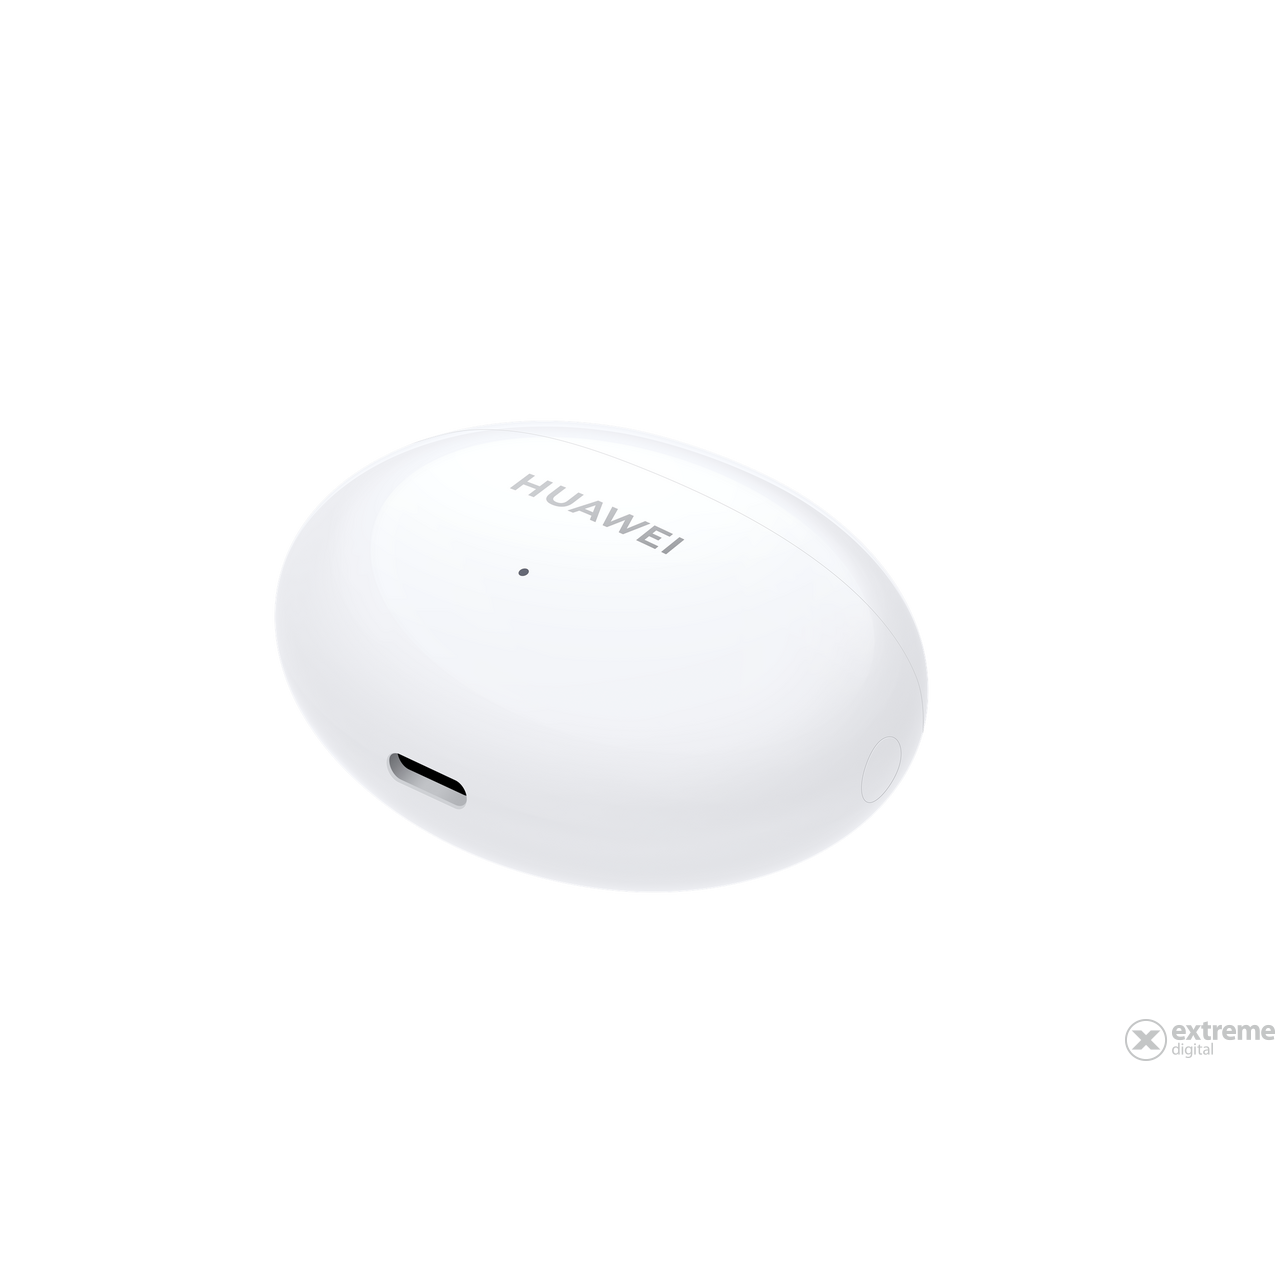 Huawei FreeBuds 4i bezdrátová sluchátka, bílá